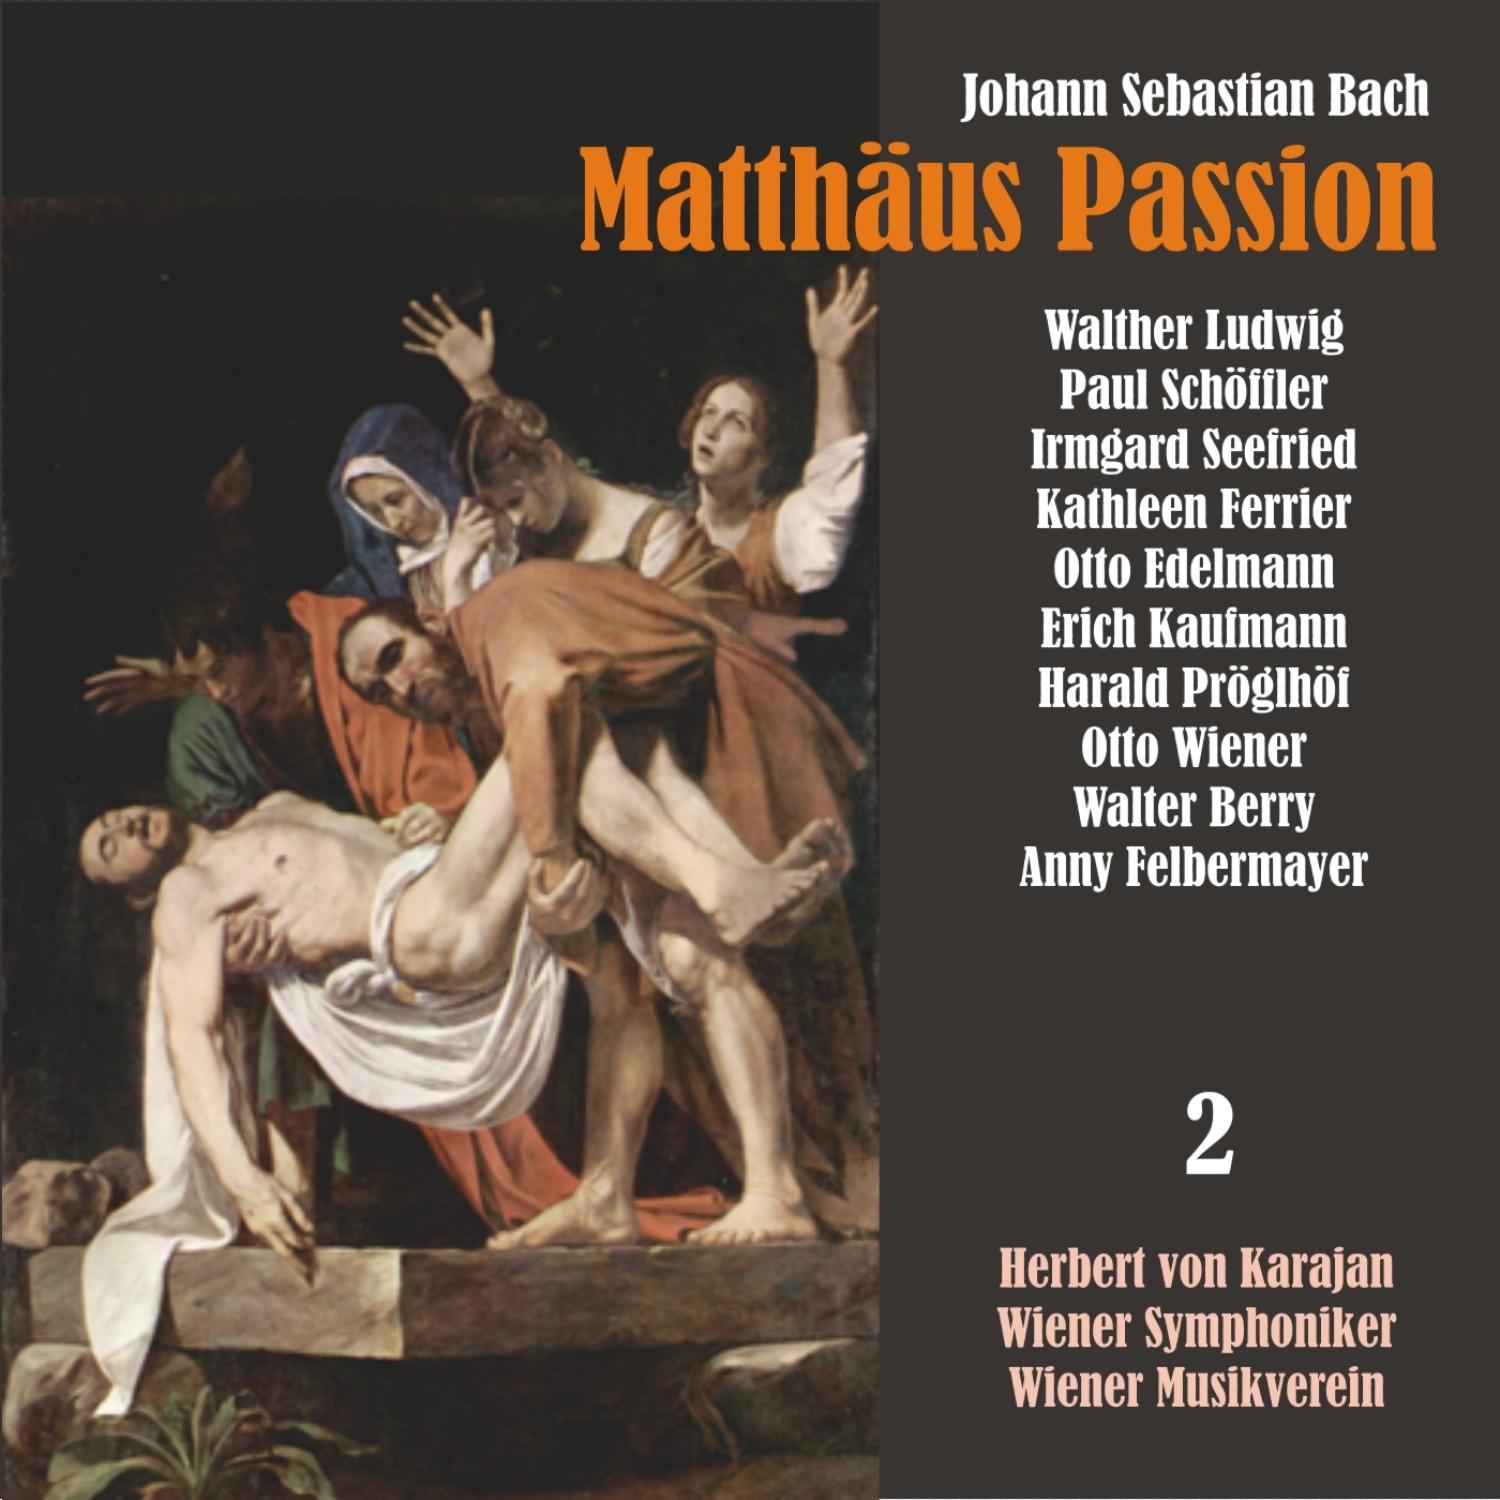 Matth us Passion, BWV 244: " Wer hat dith so gesthllagen"